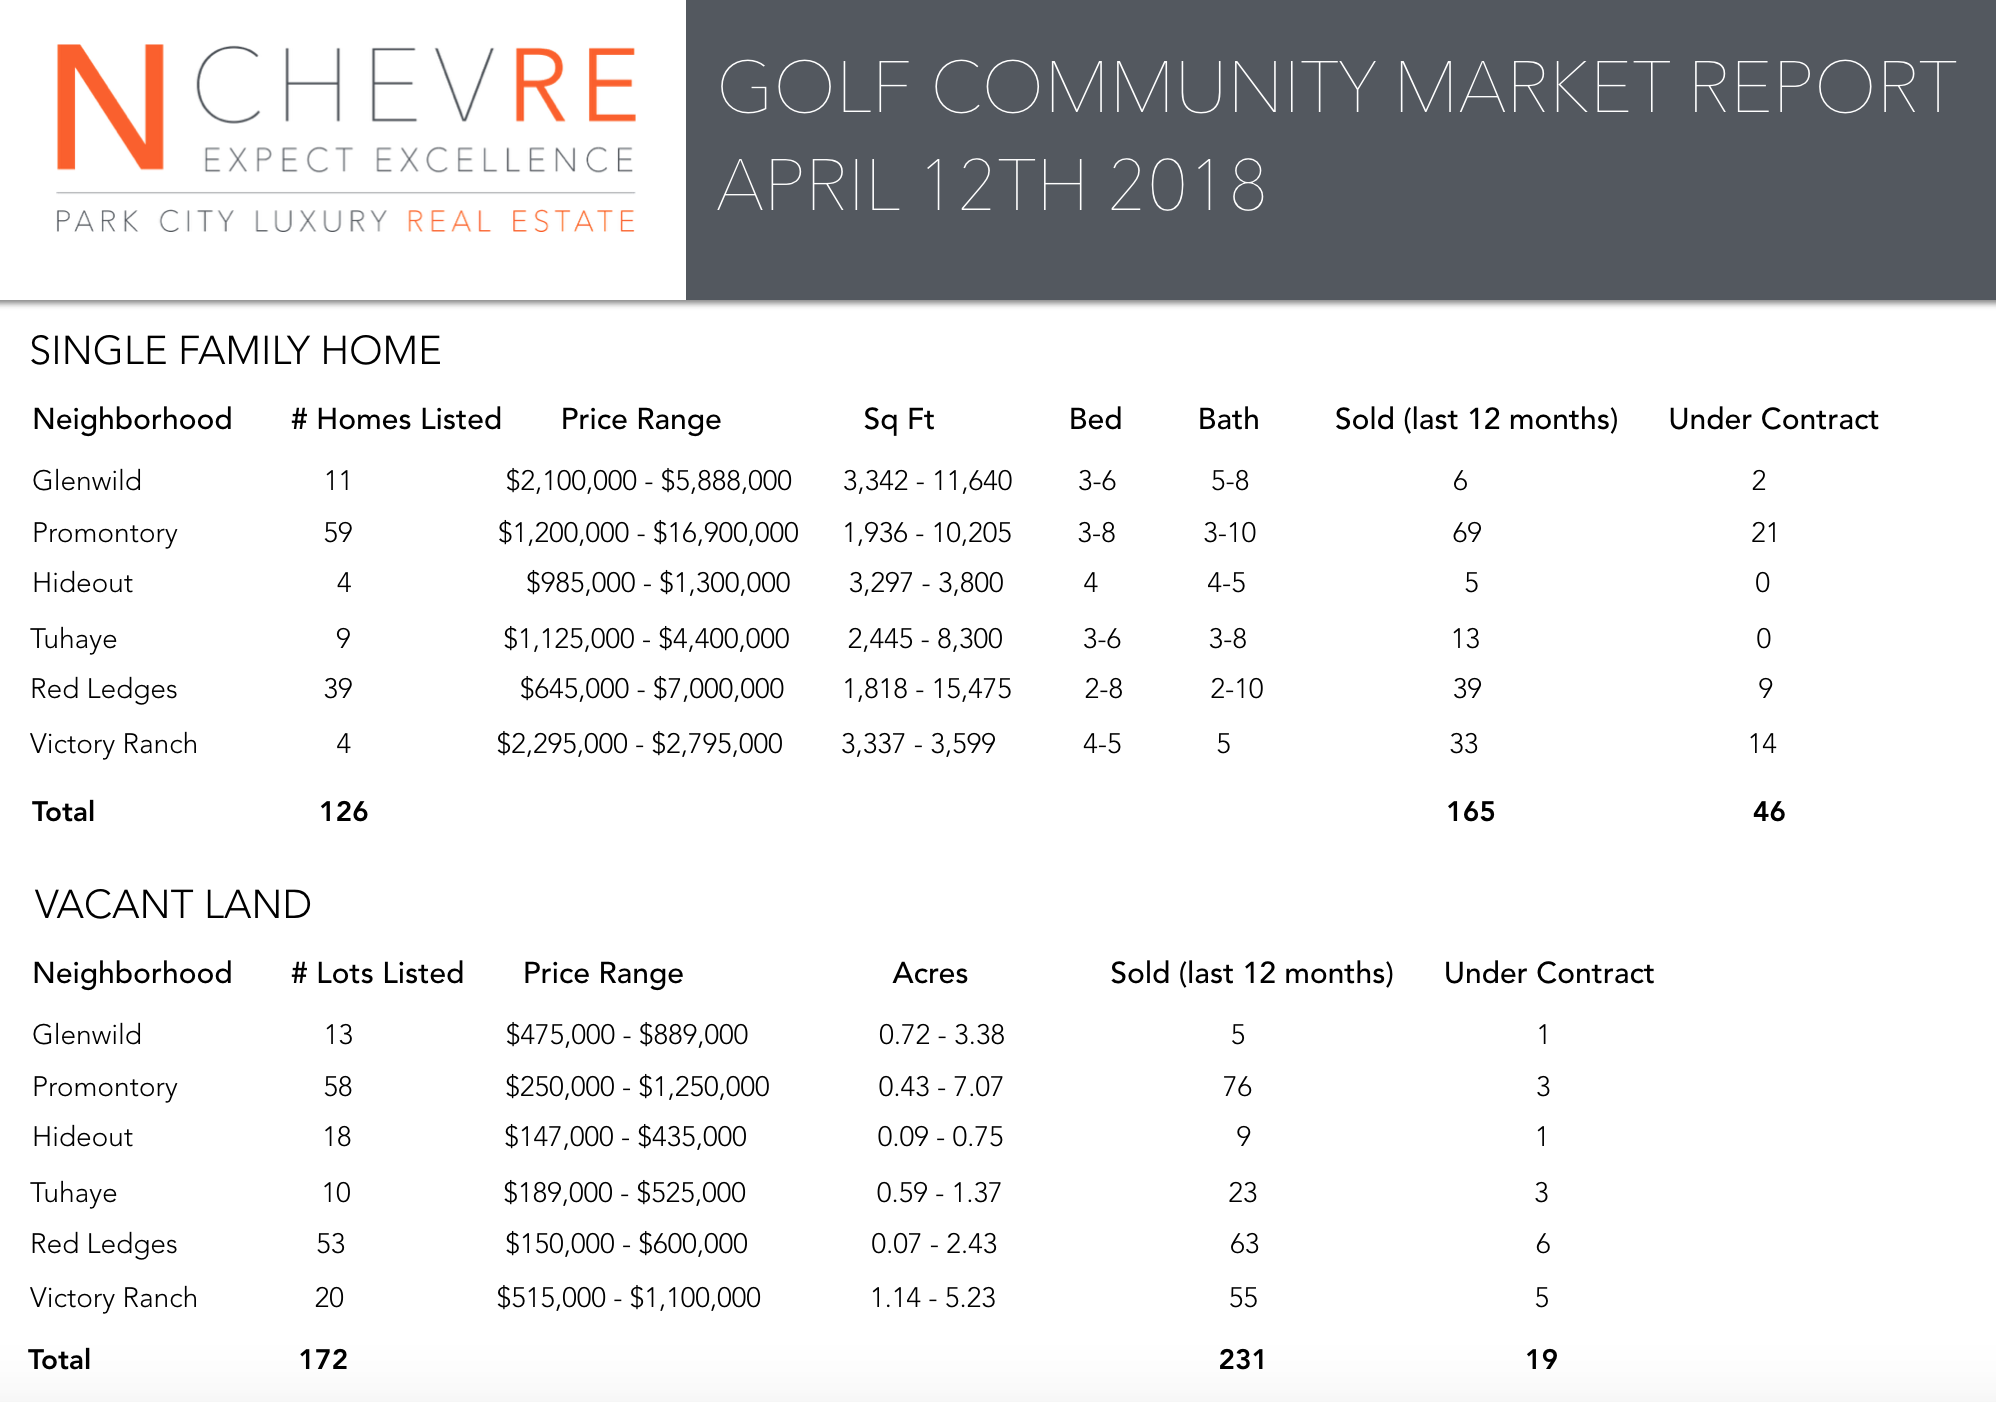 Park City Golf Community Market Report April 2018